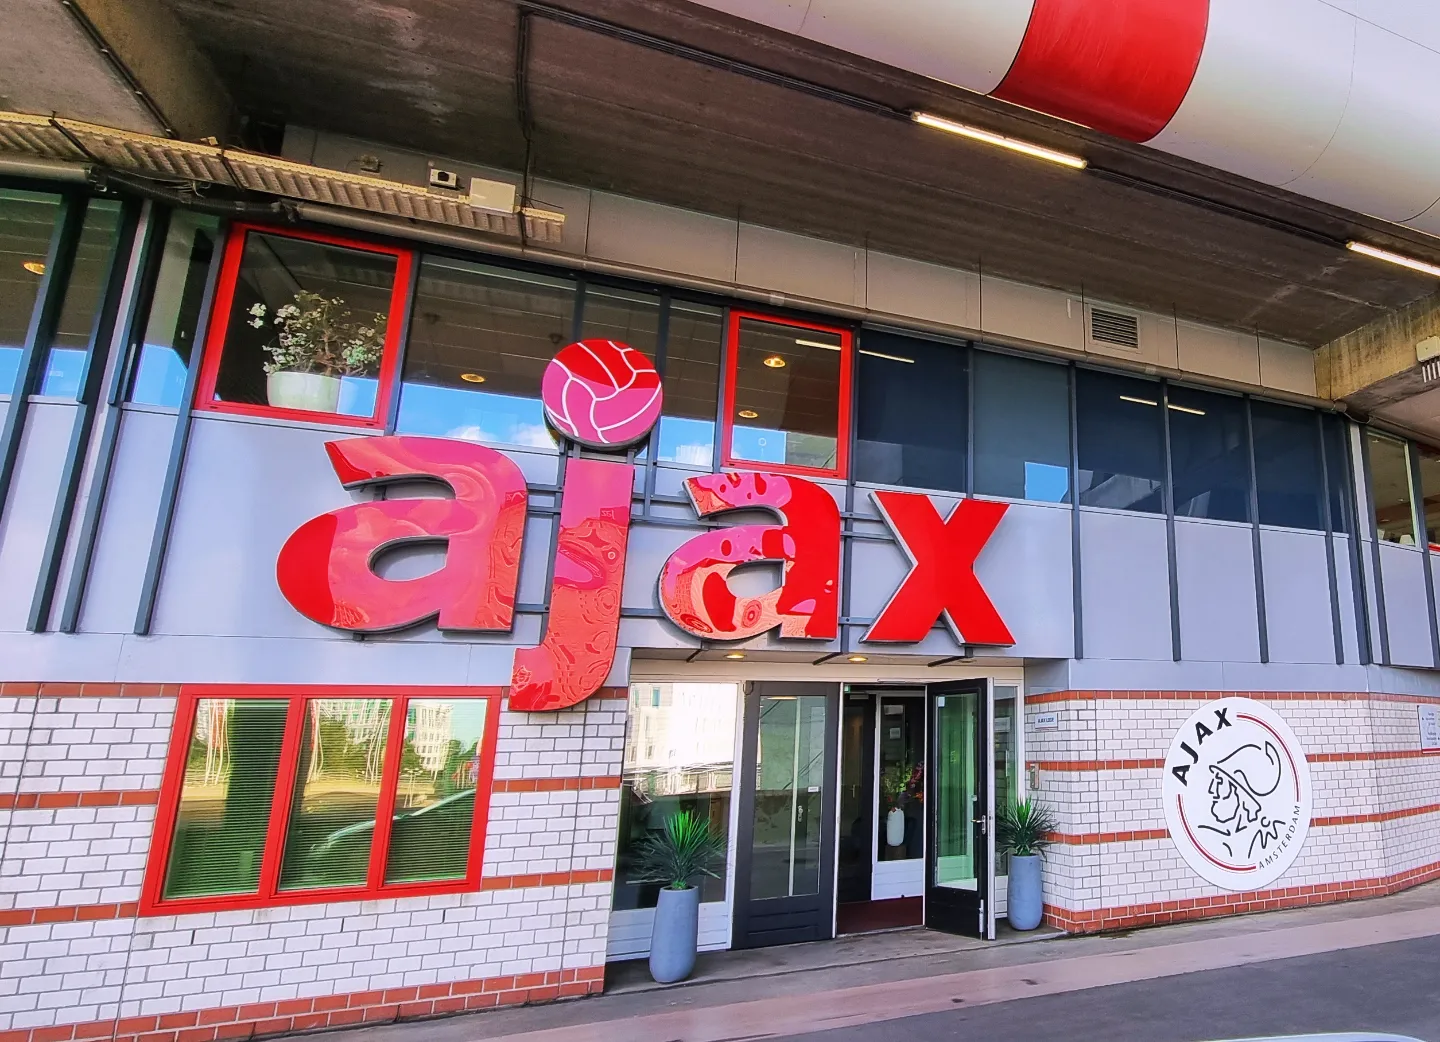 Ajax Amsterdam Arena